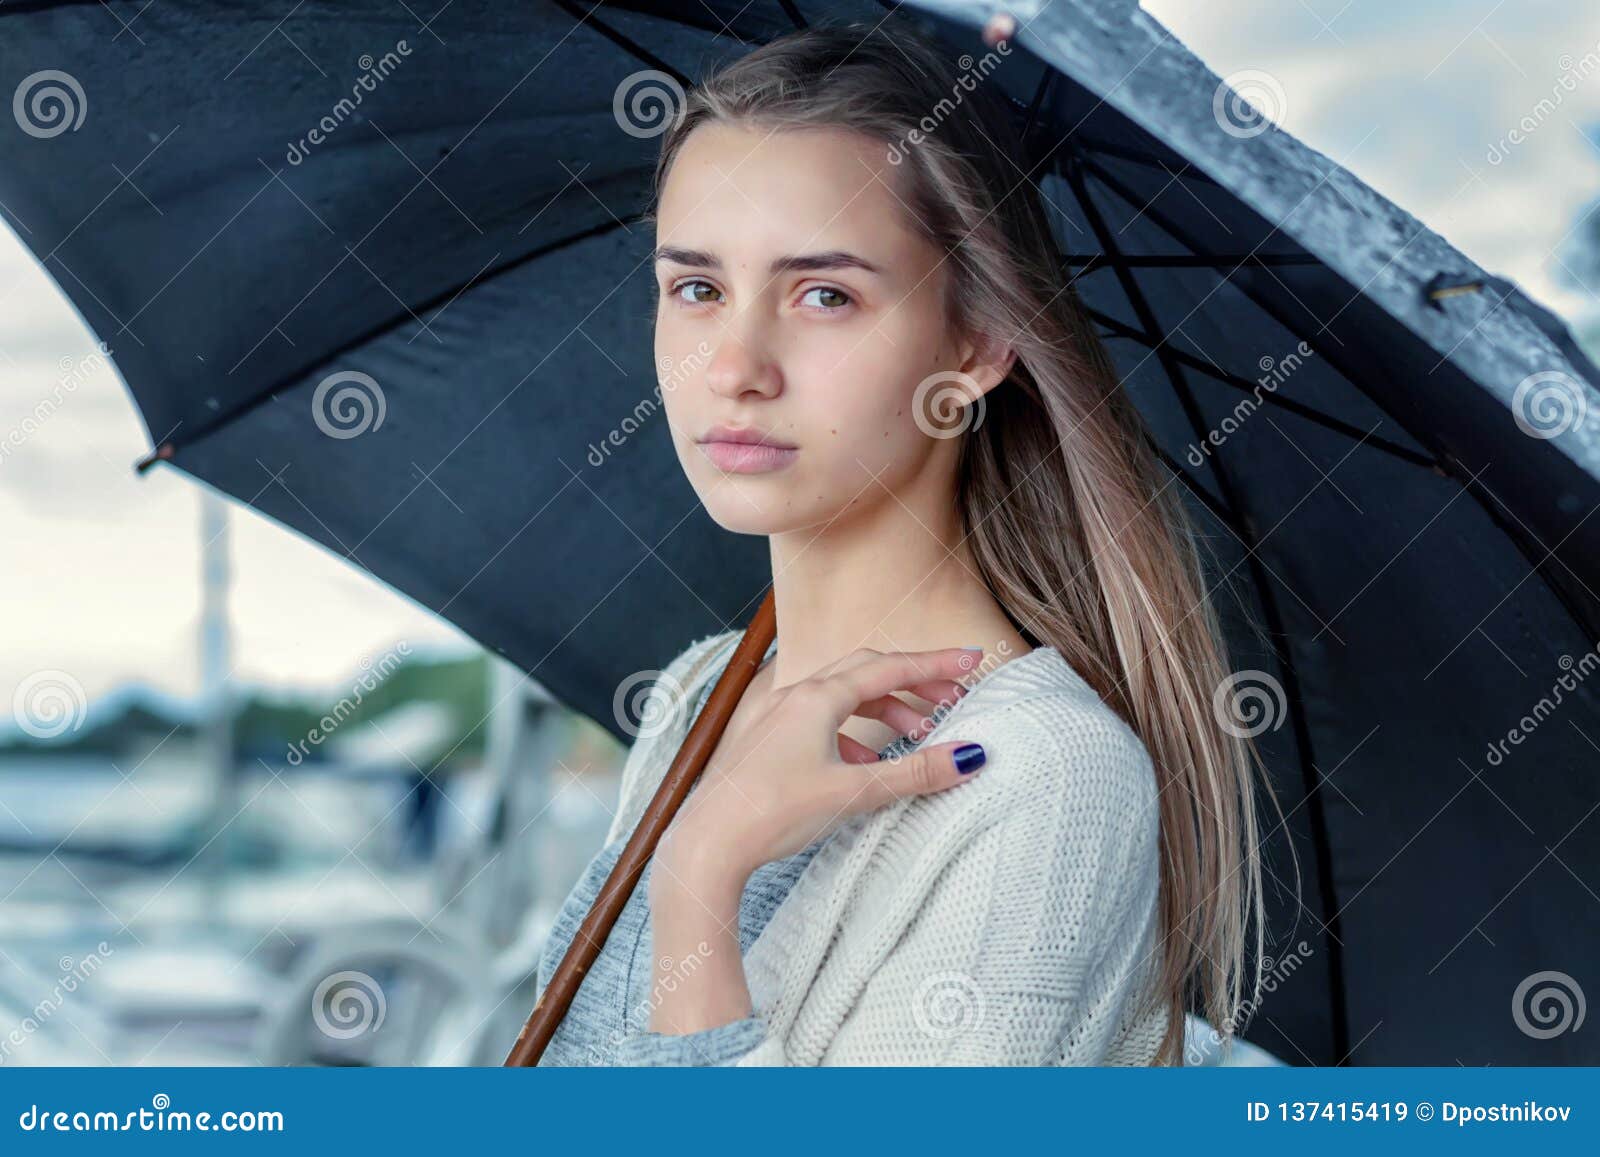 Sad Girl Hiding Under A Black Umbrella From The Rain